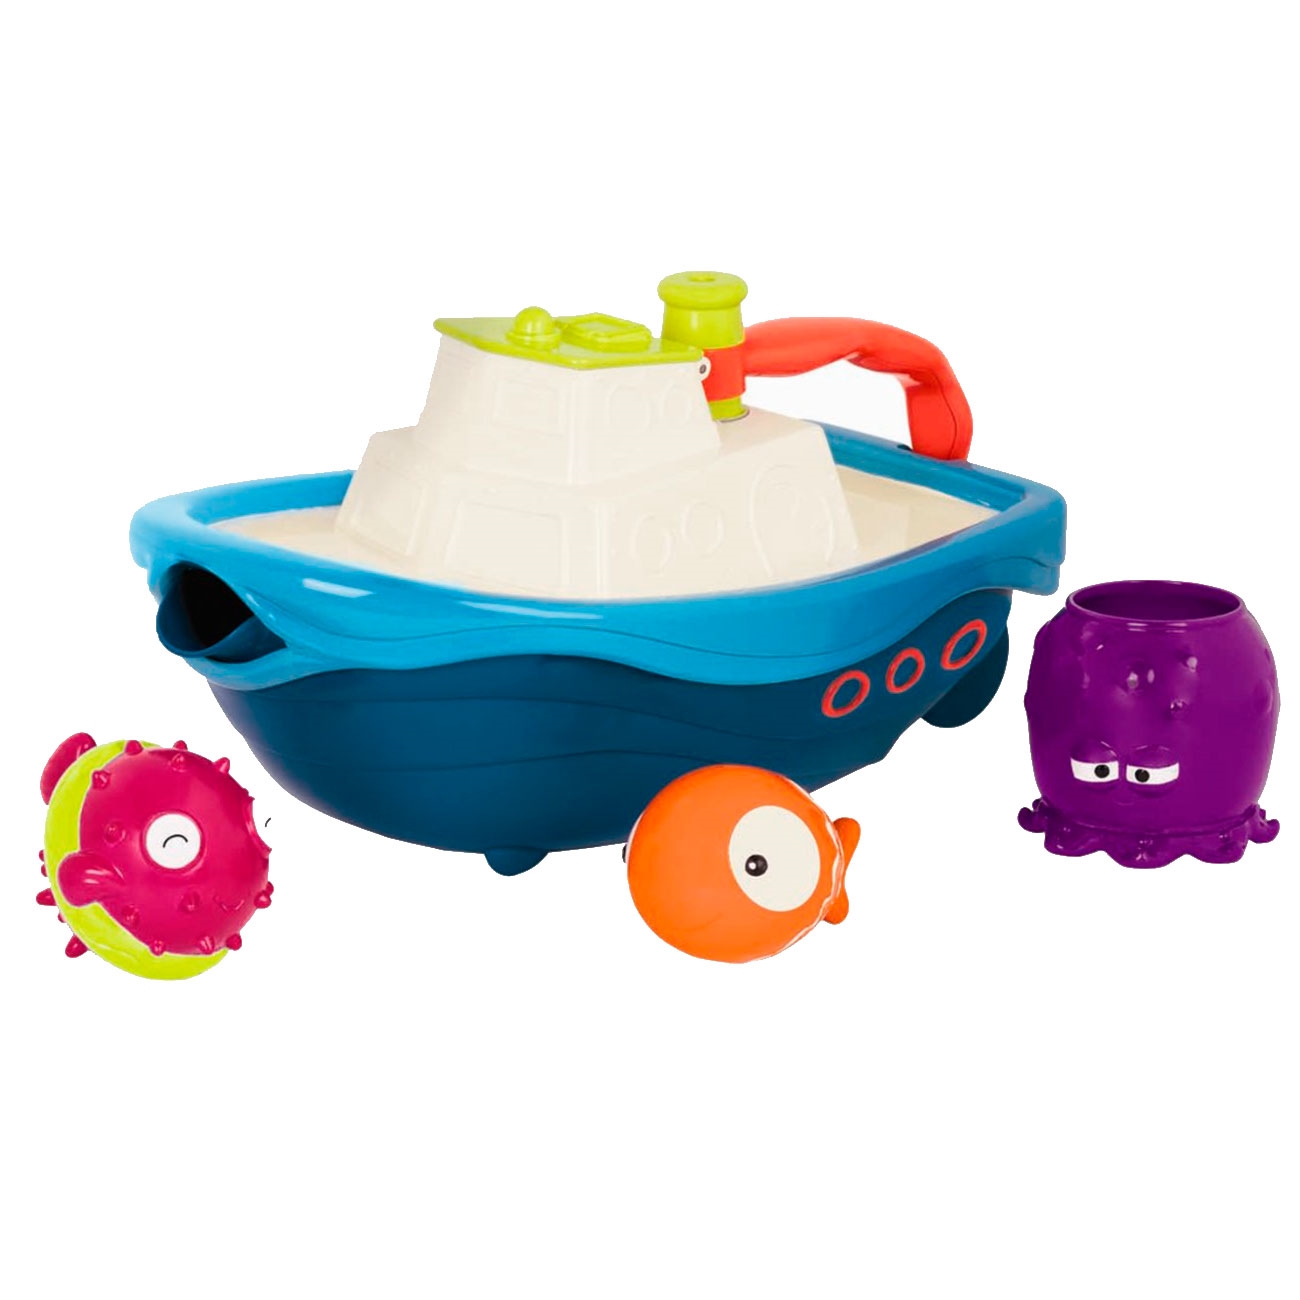 B Toys - Boat with bath toys - (701520)